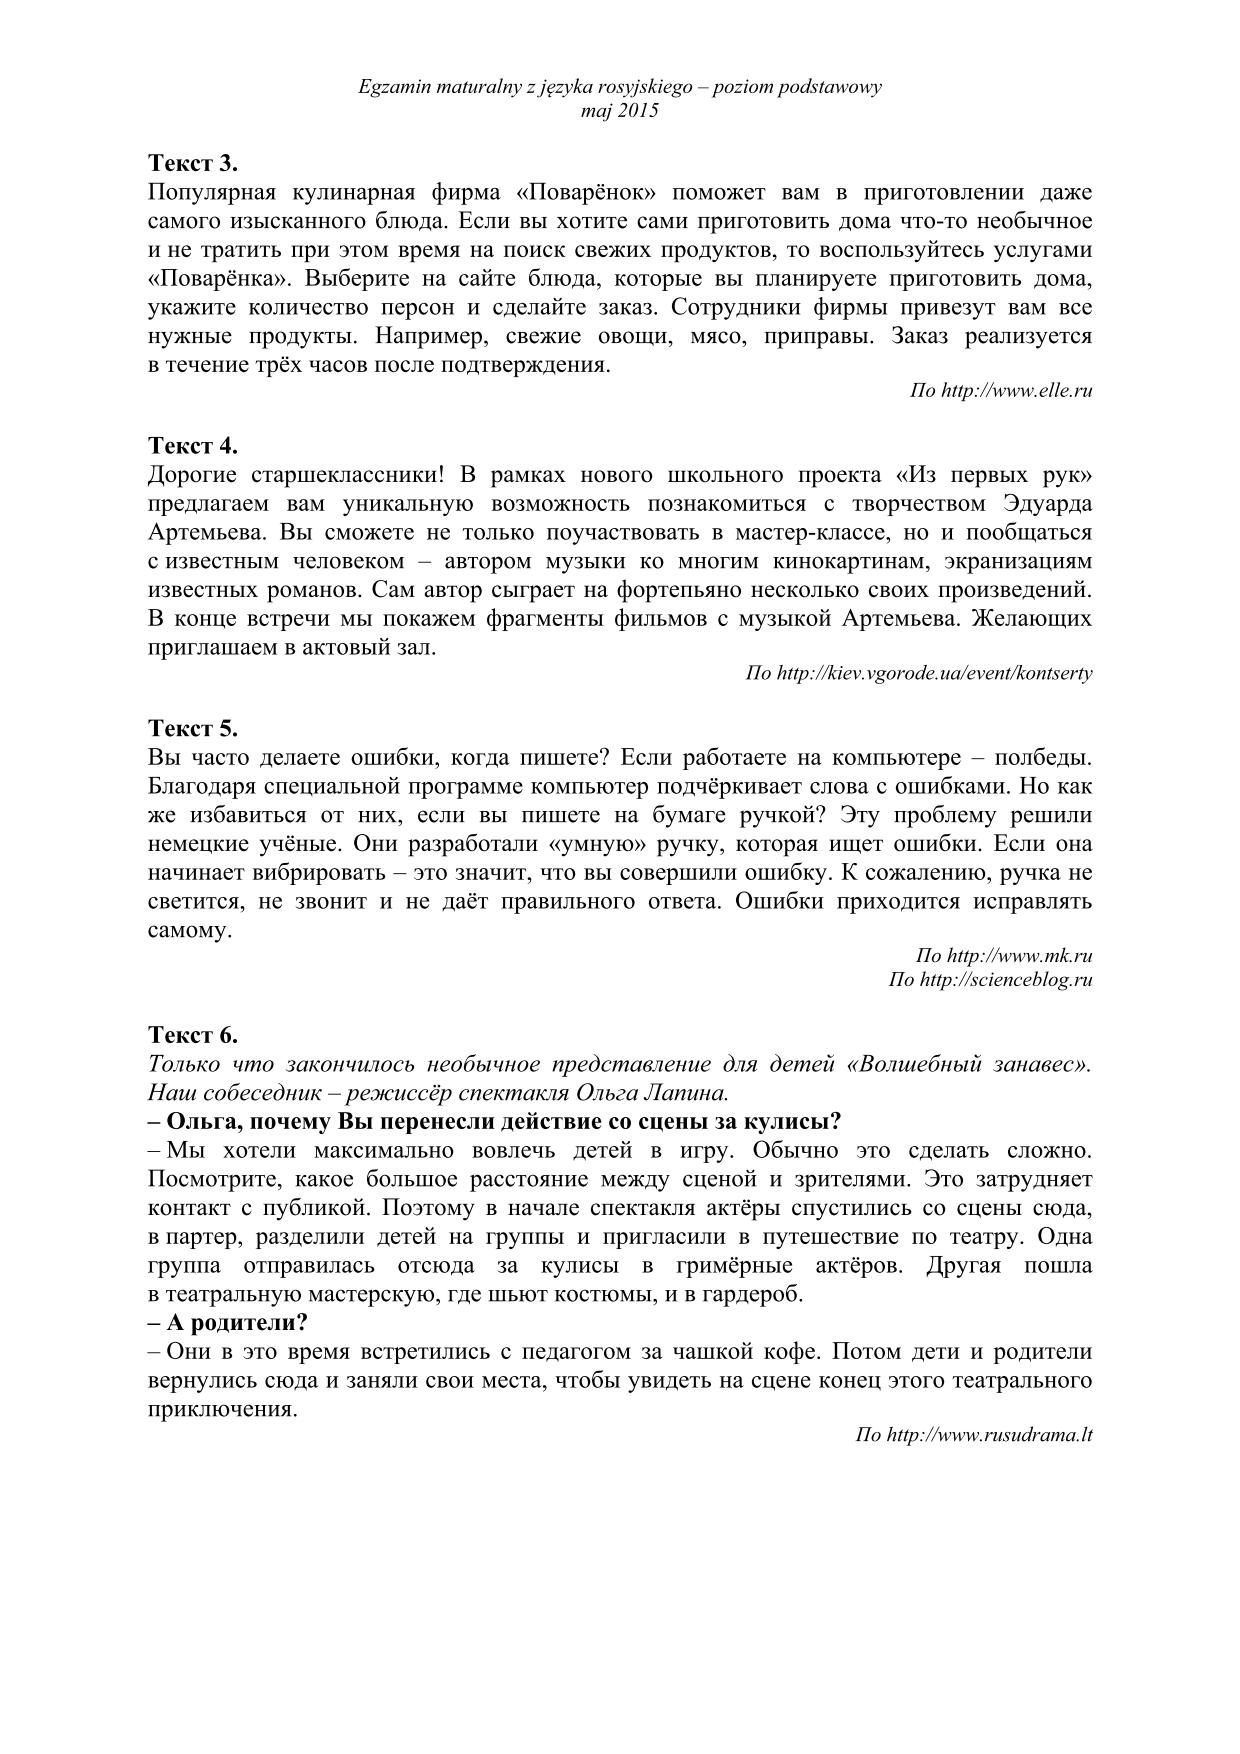 transkrypcja-rosyjski-poziom-podstawowy-matura-2015-3